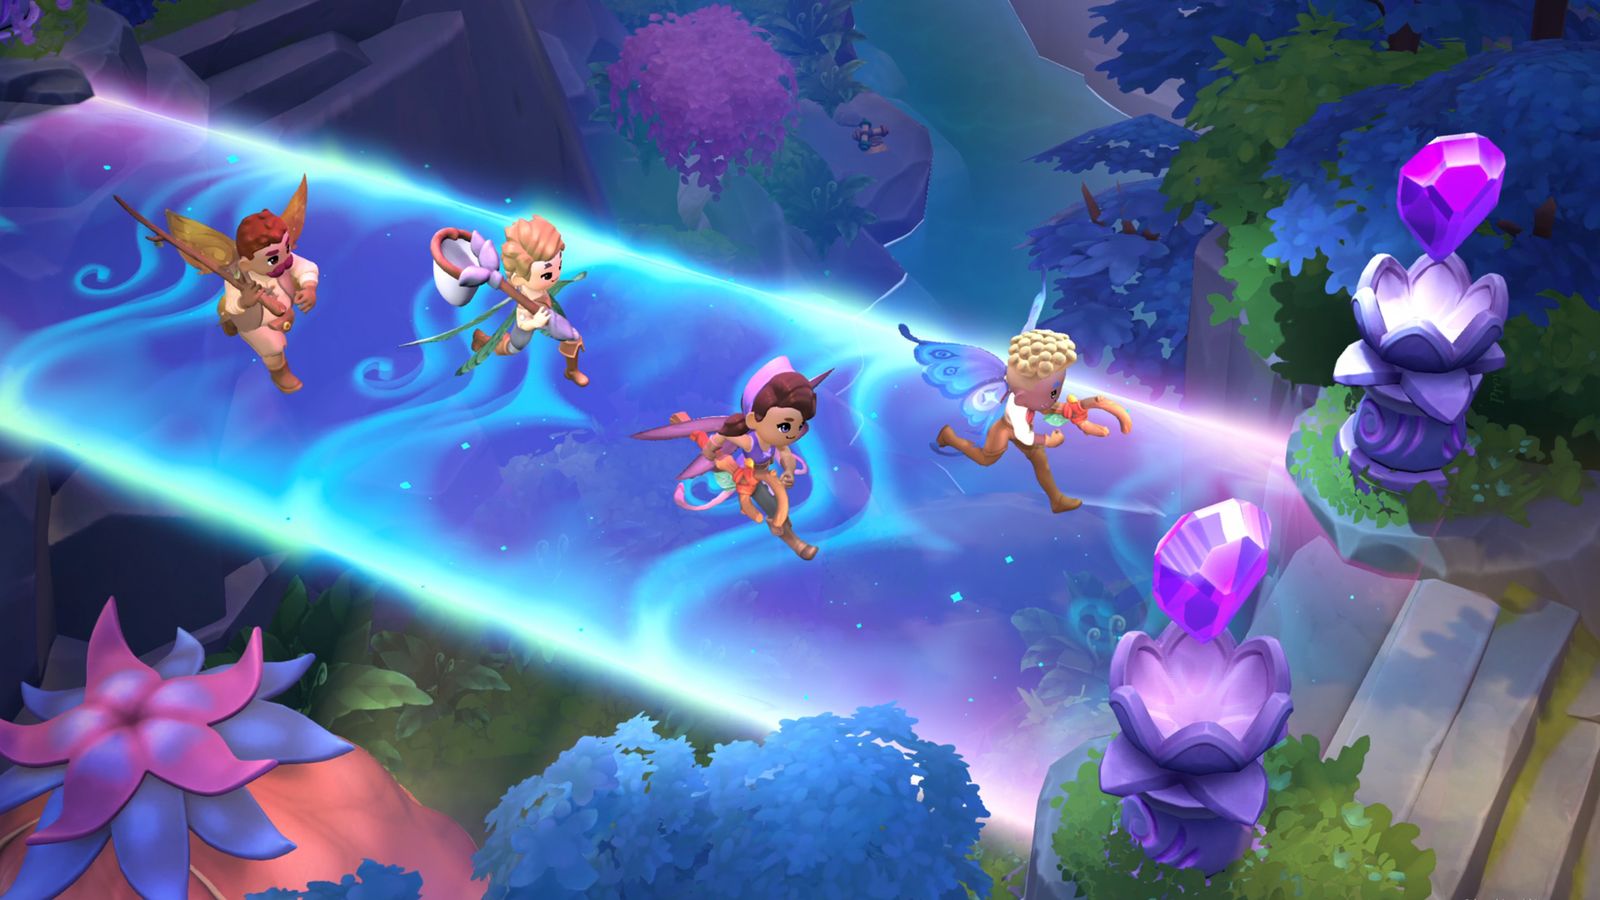 Fae Farm - multiplayer mode showcasing 4 angel characters running across a magical bridge